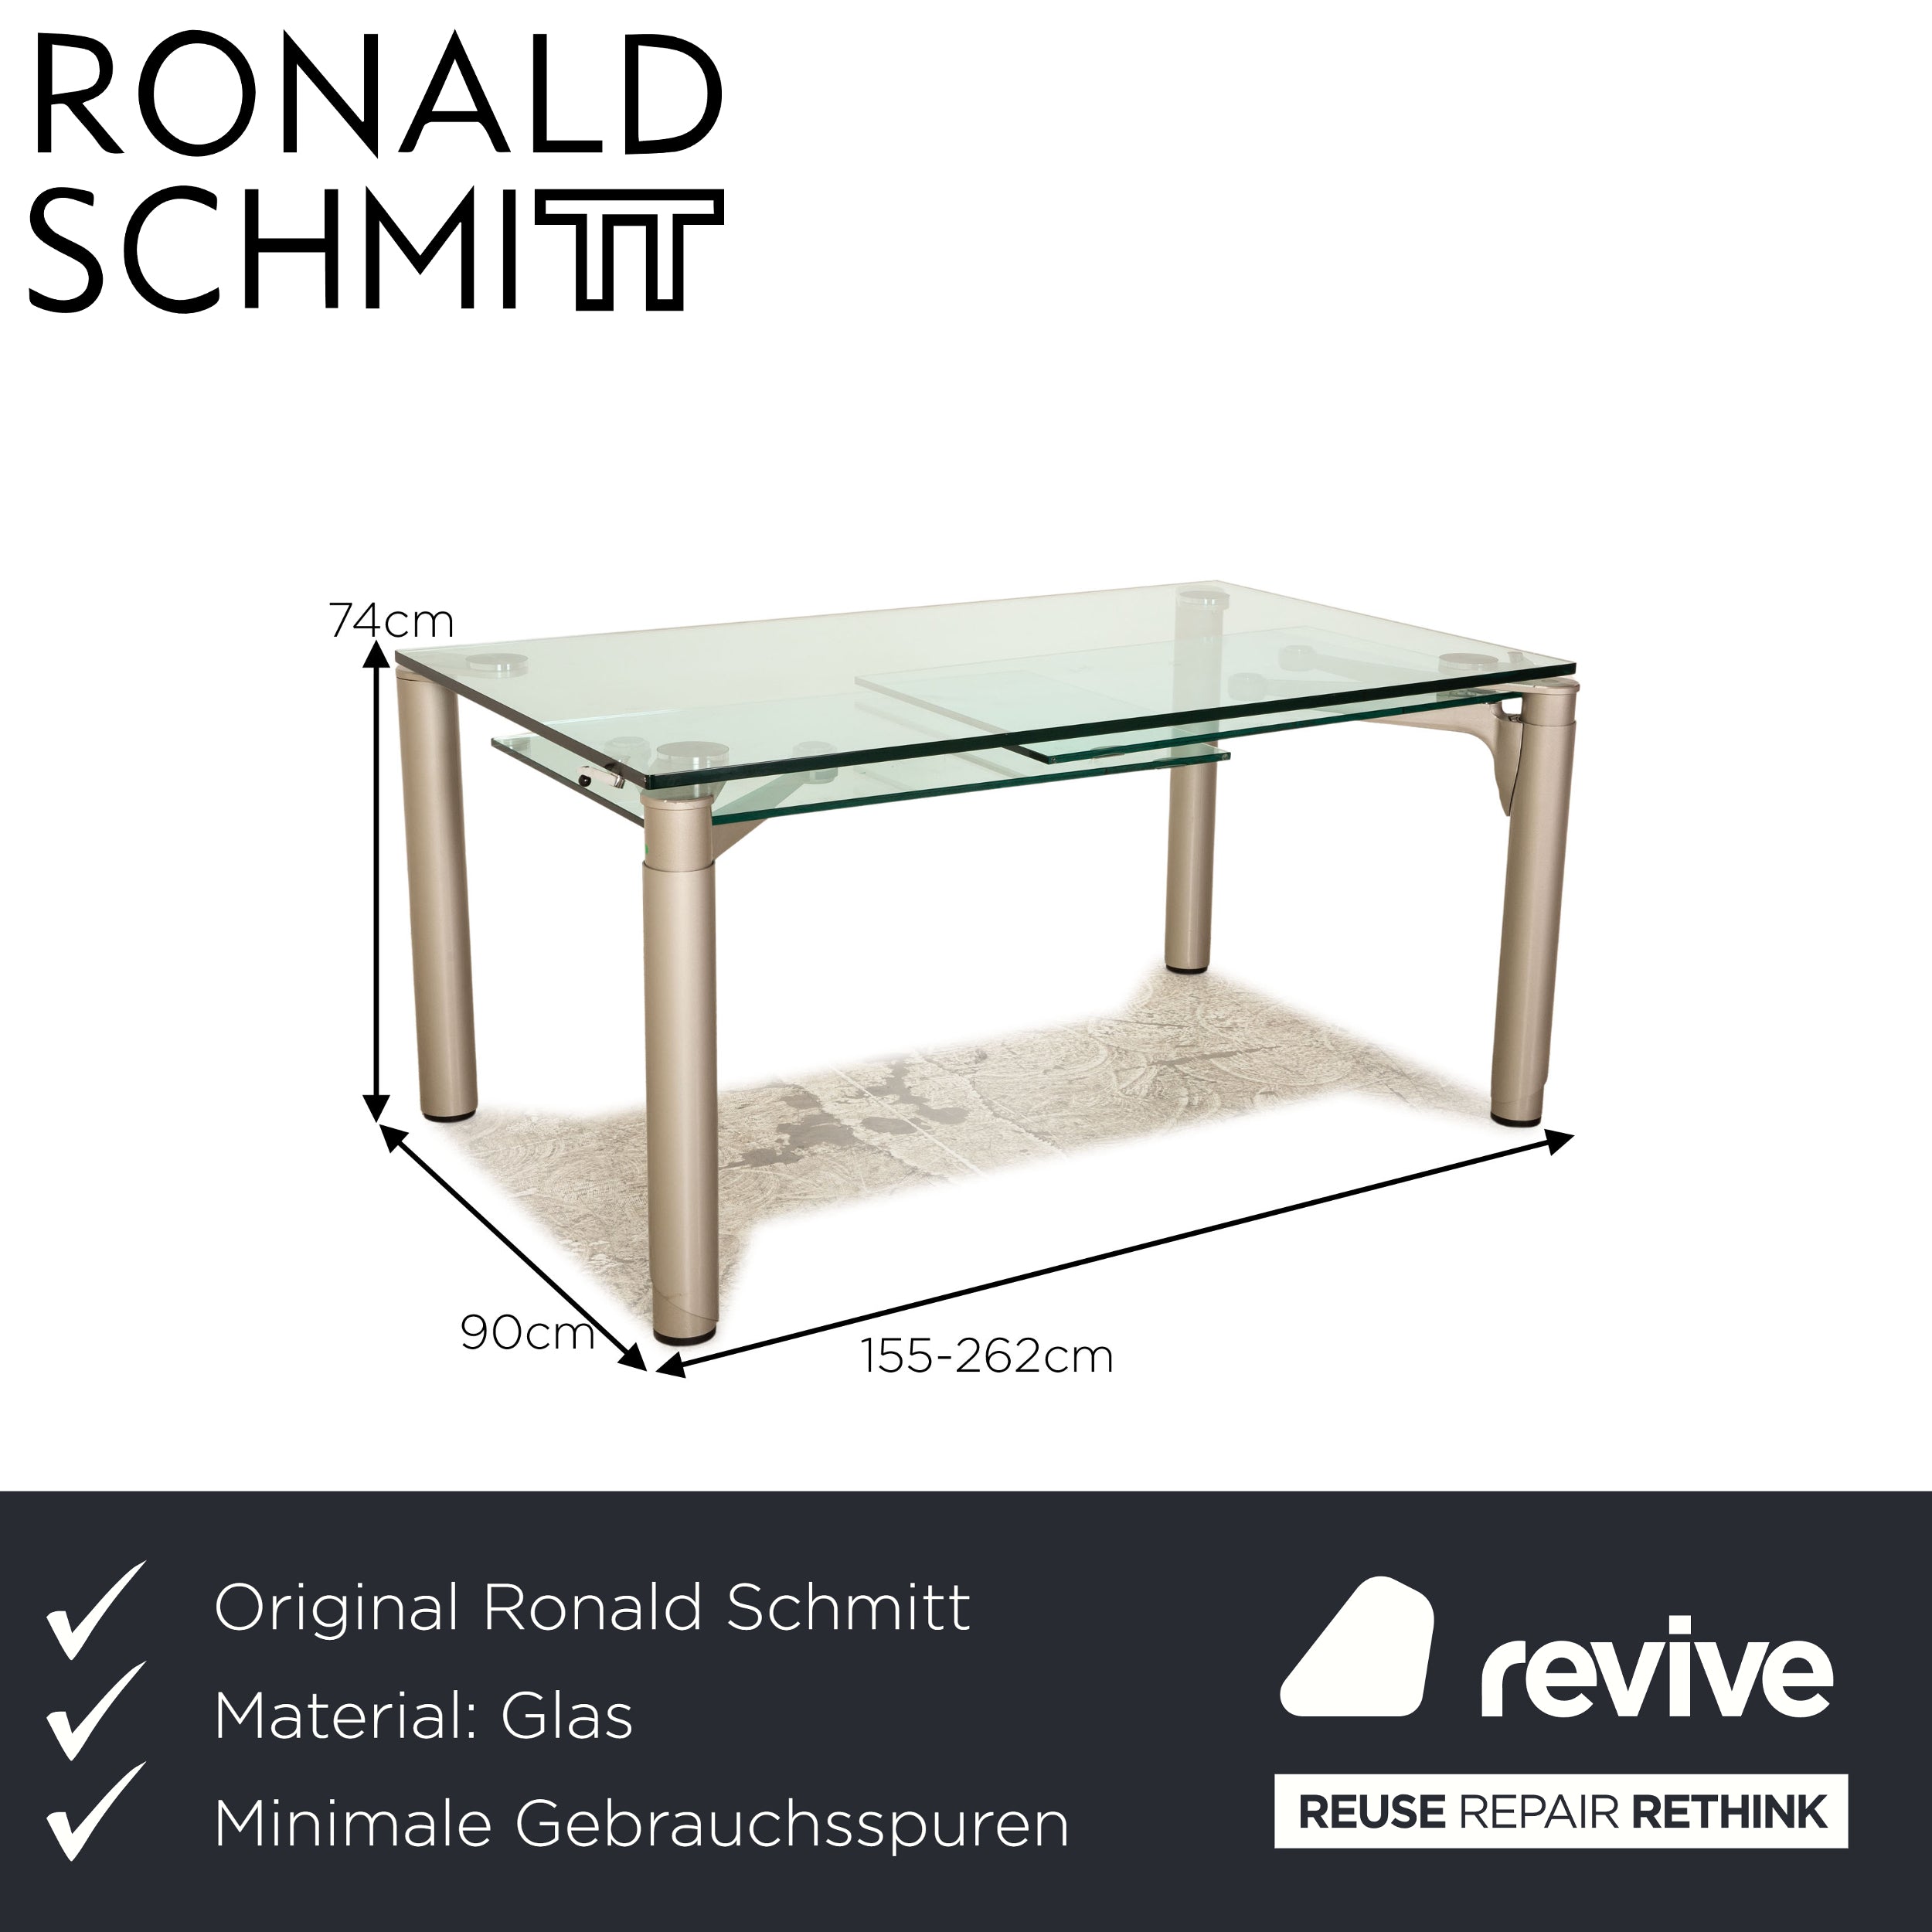 Ronald Schmitt 801E glass dining table silver function